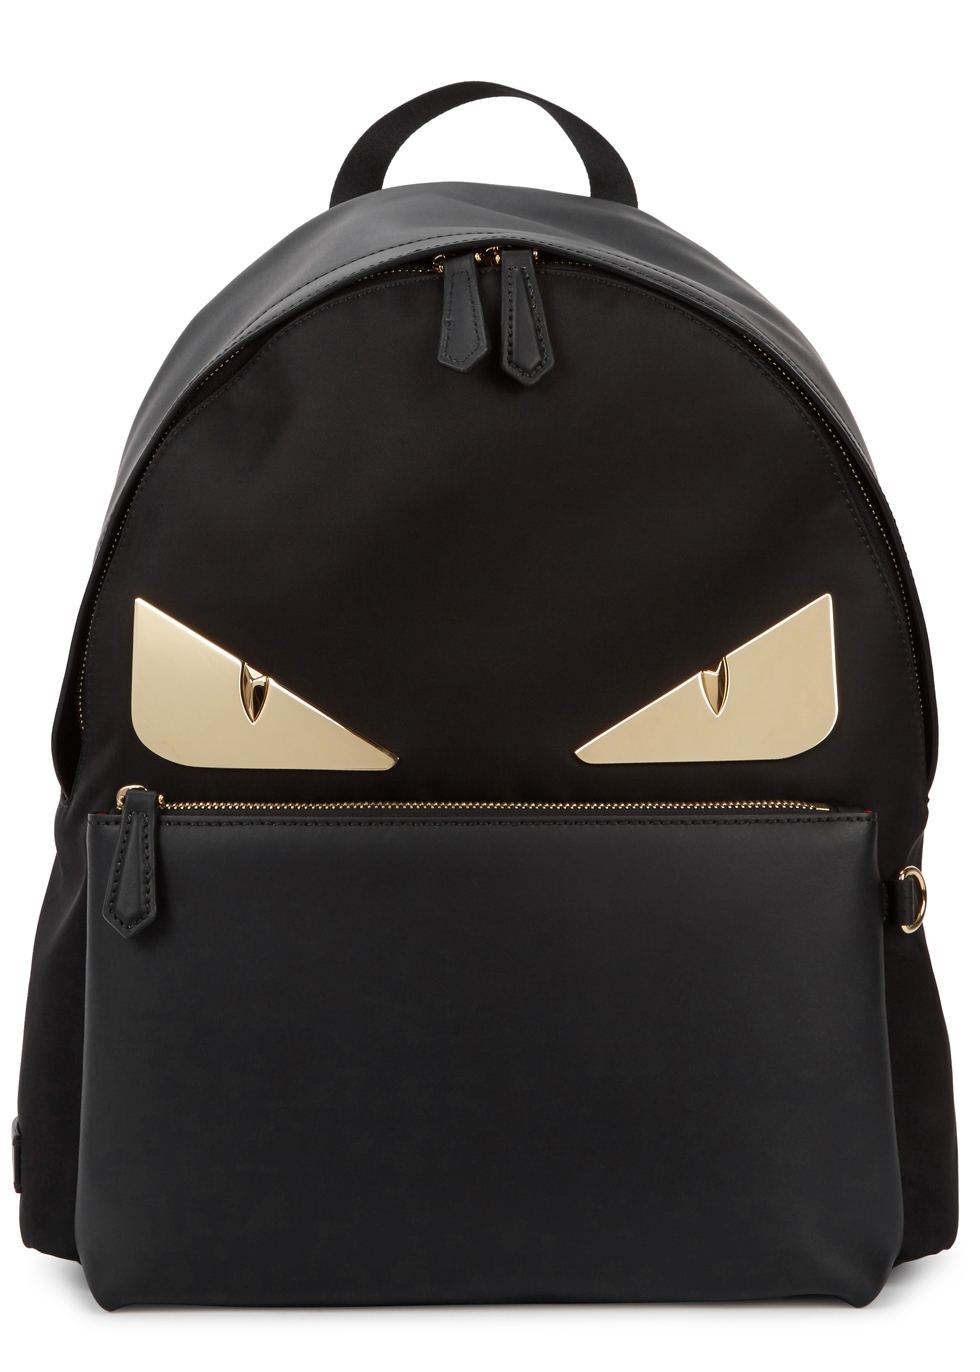 Fendi Monster leather and nylon backpack - Harvey Nichols